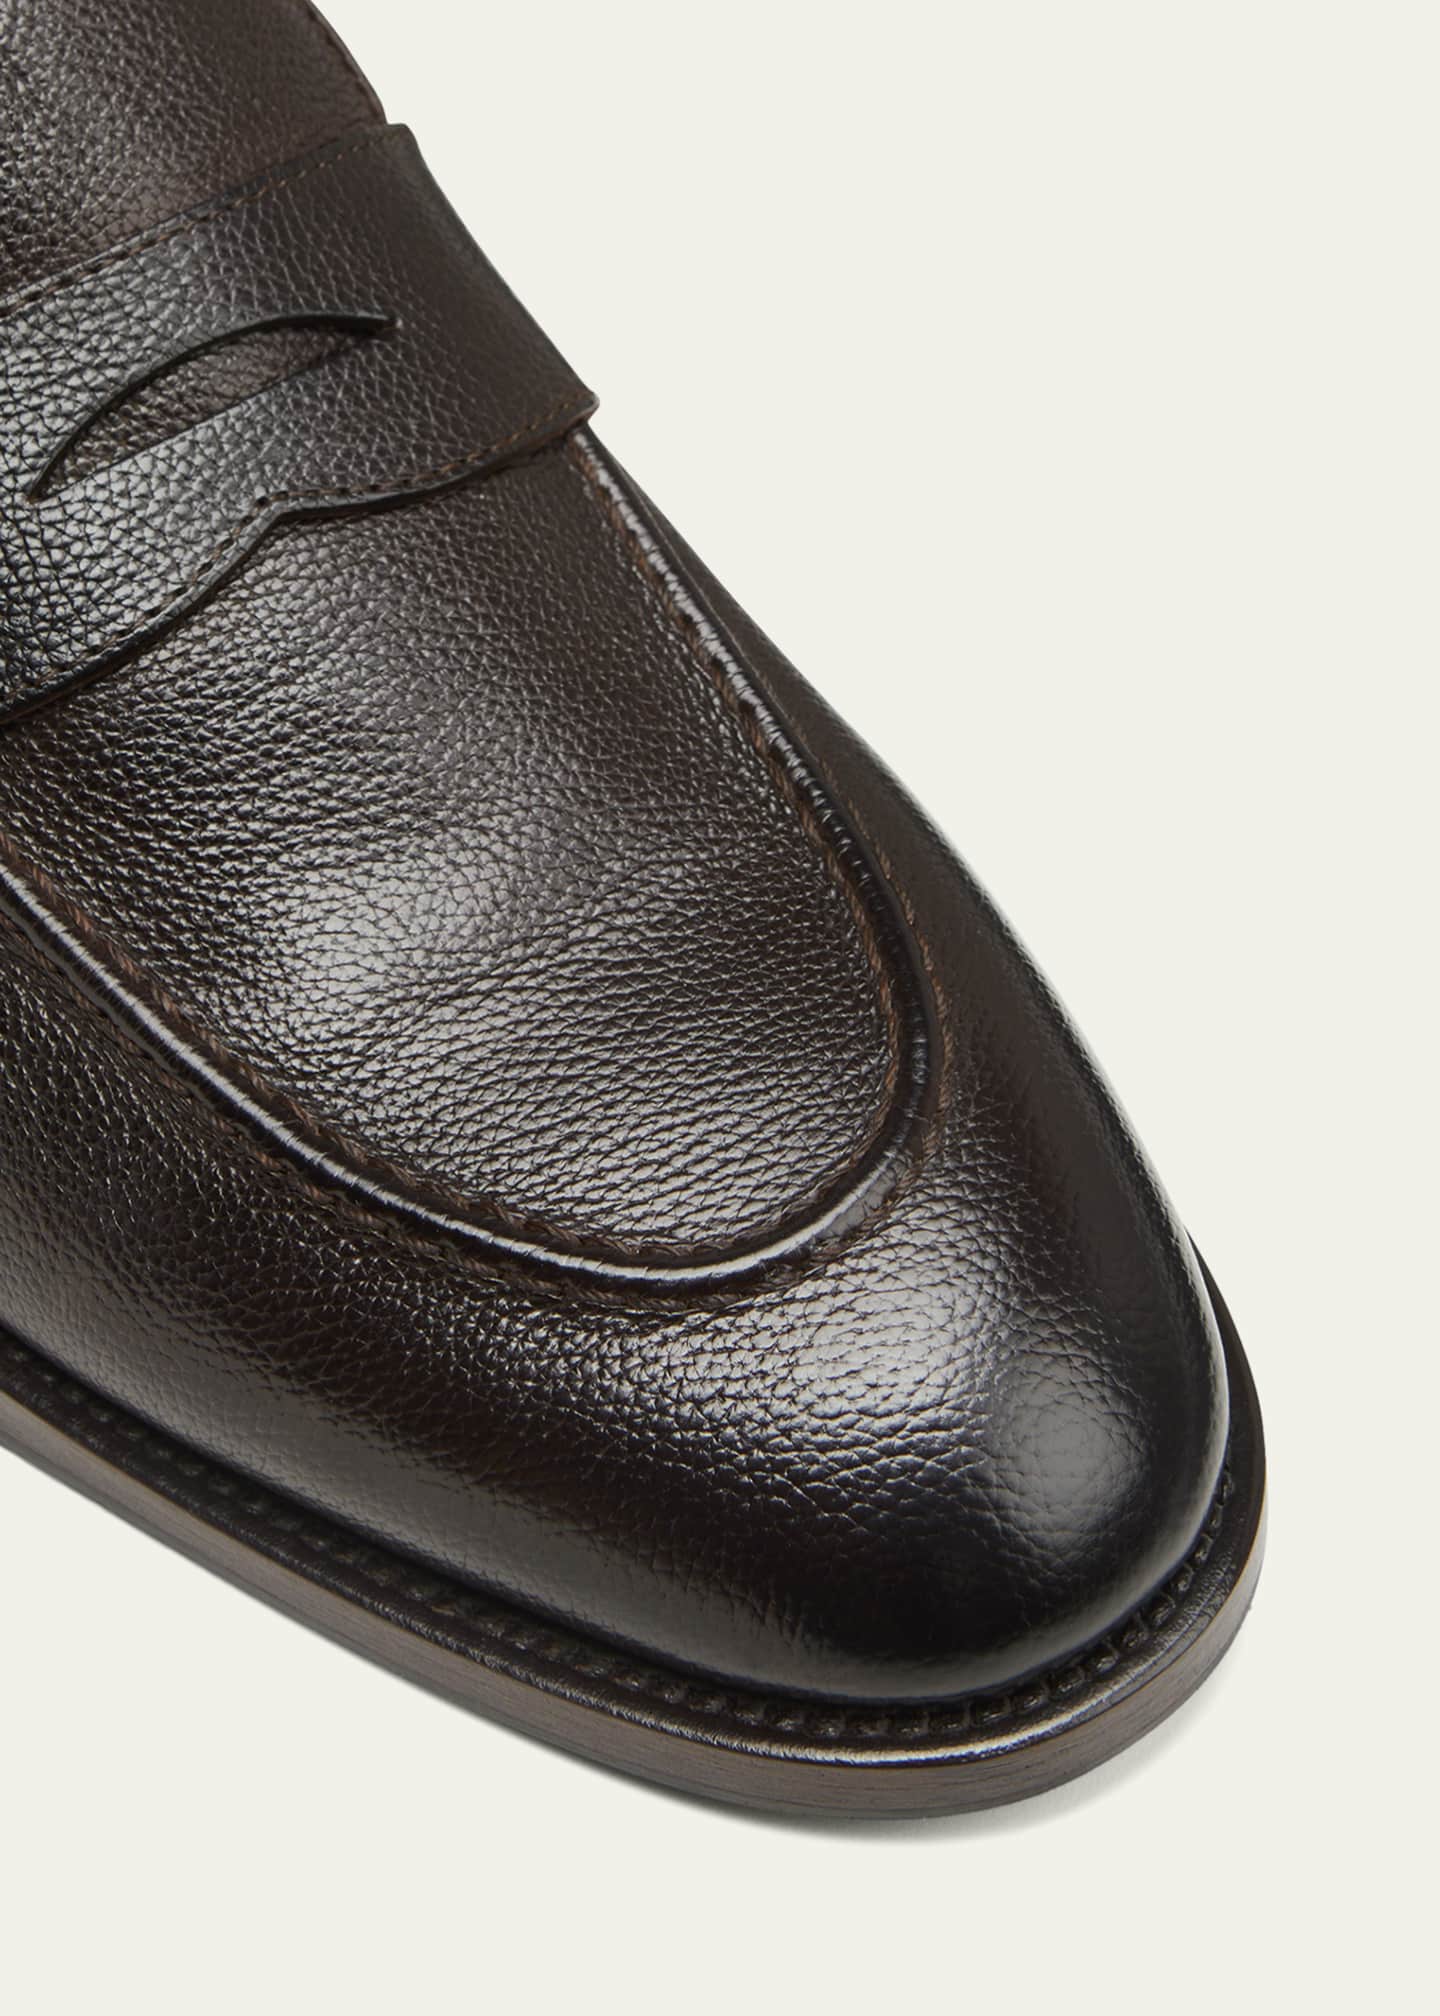 Brunello Cucinelli Men's Leather Flex Penny Loafers - Bergdorf Goodman